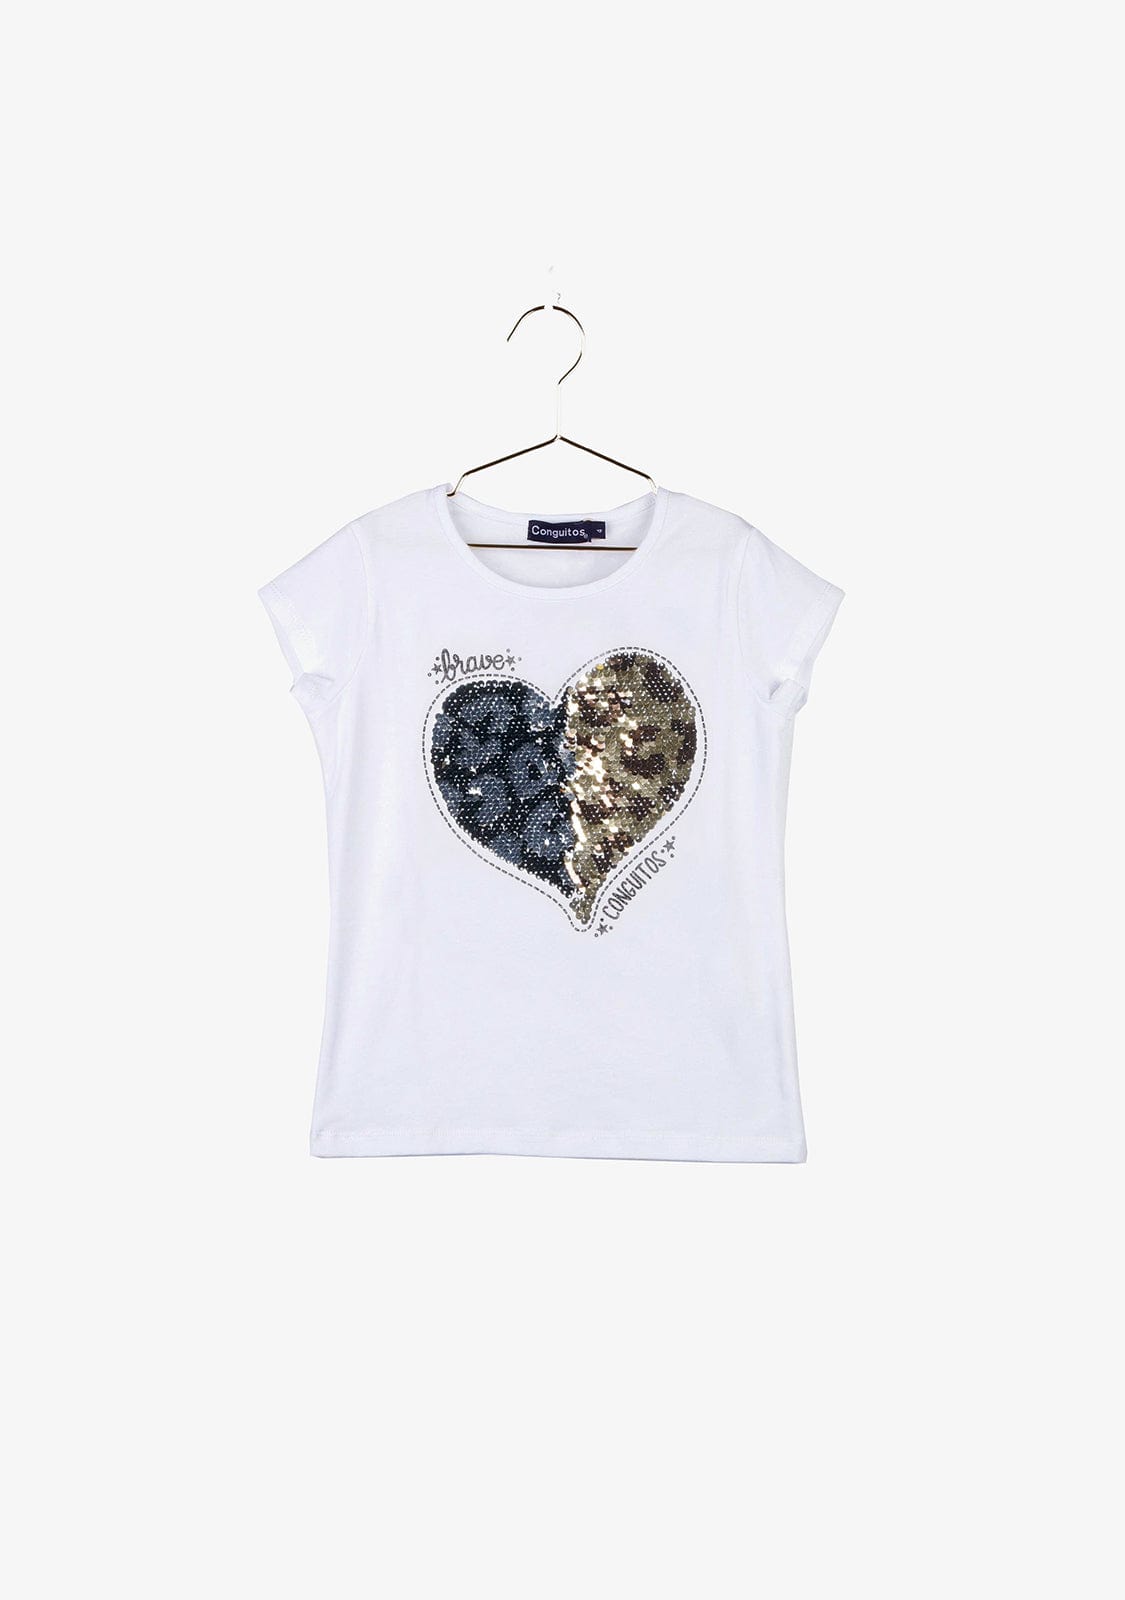 CONGUITOS TEXTIL Clothing Girl's "Heart" Reversible Sequins T-Shirt